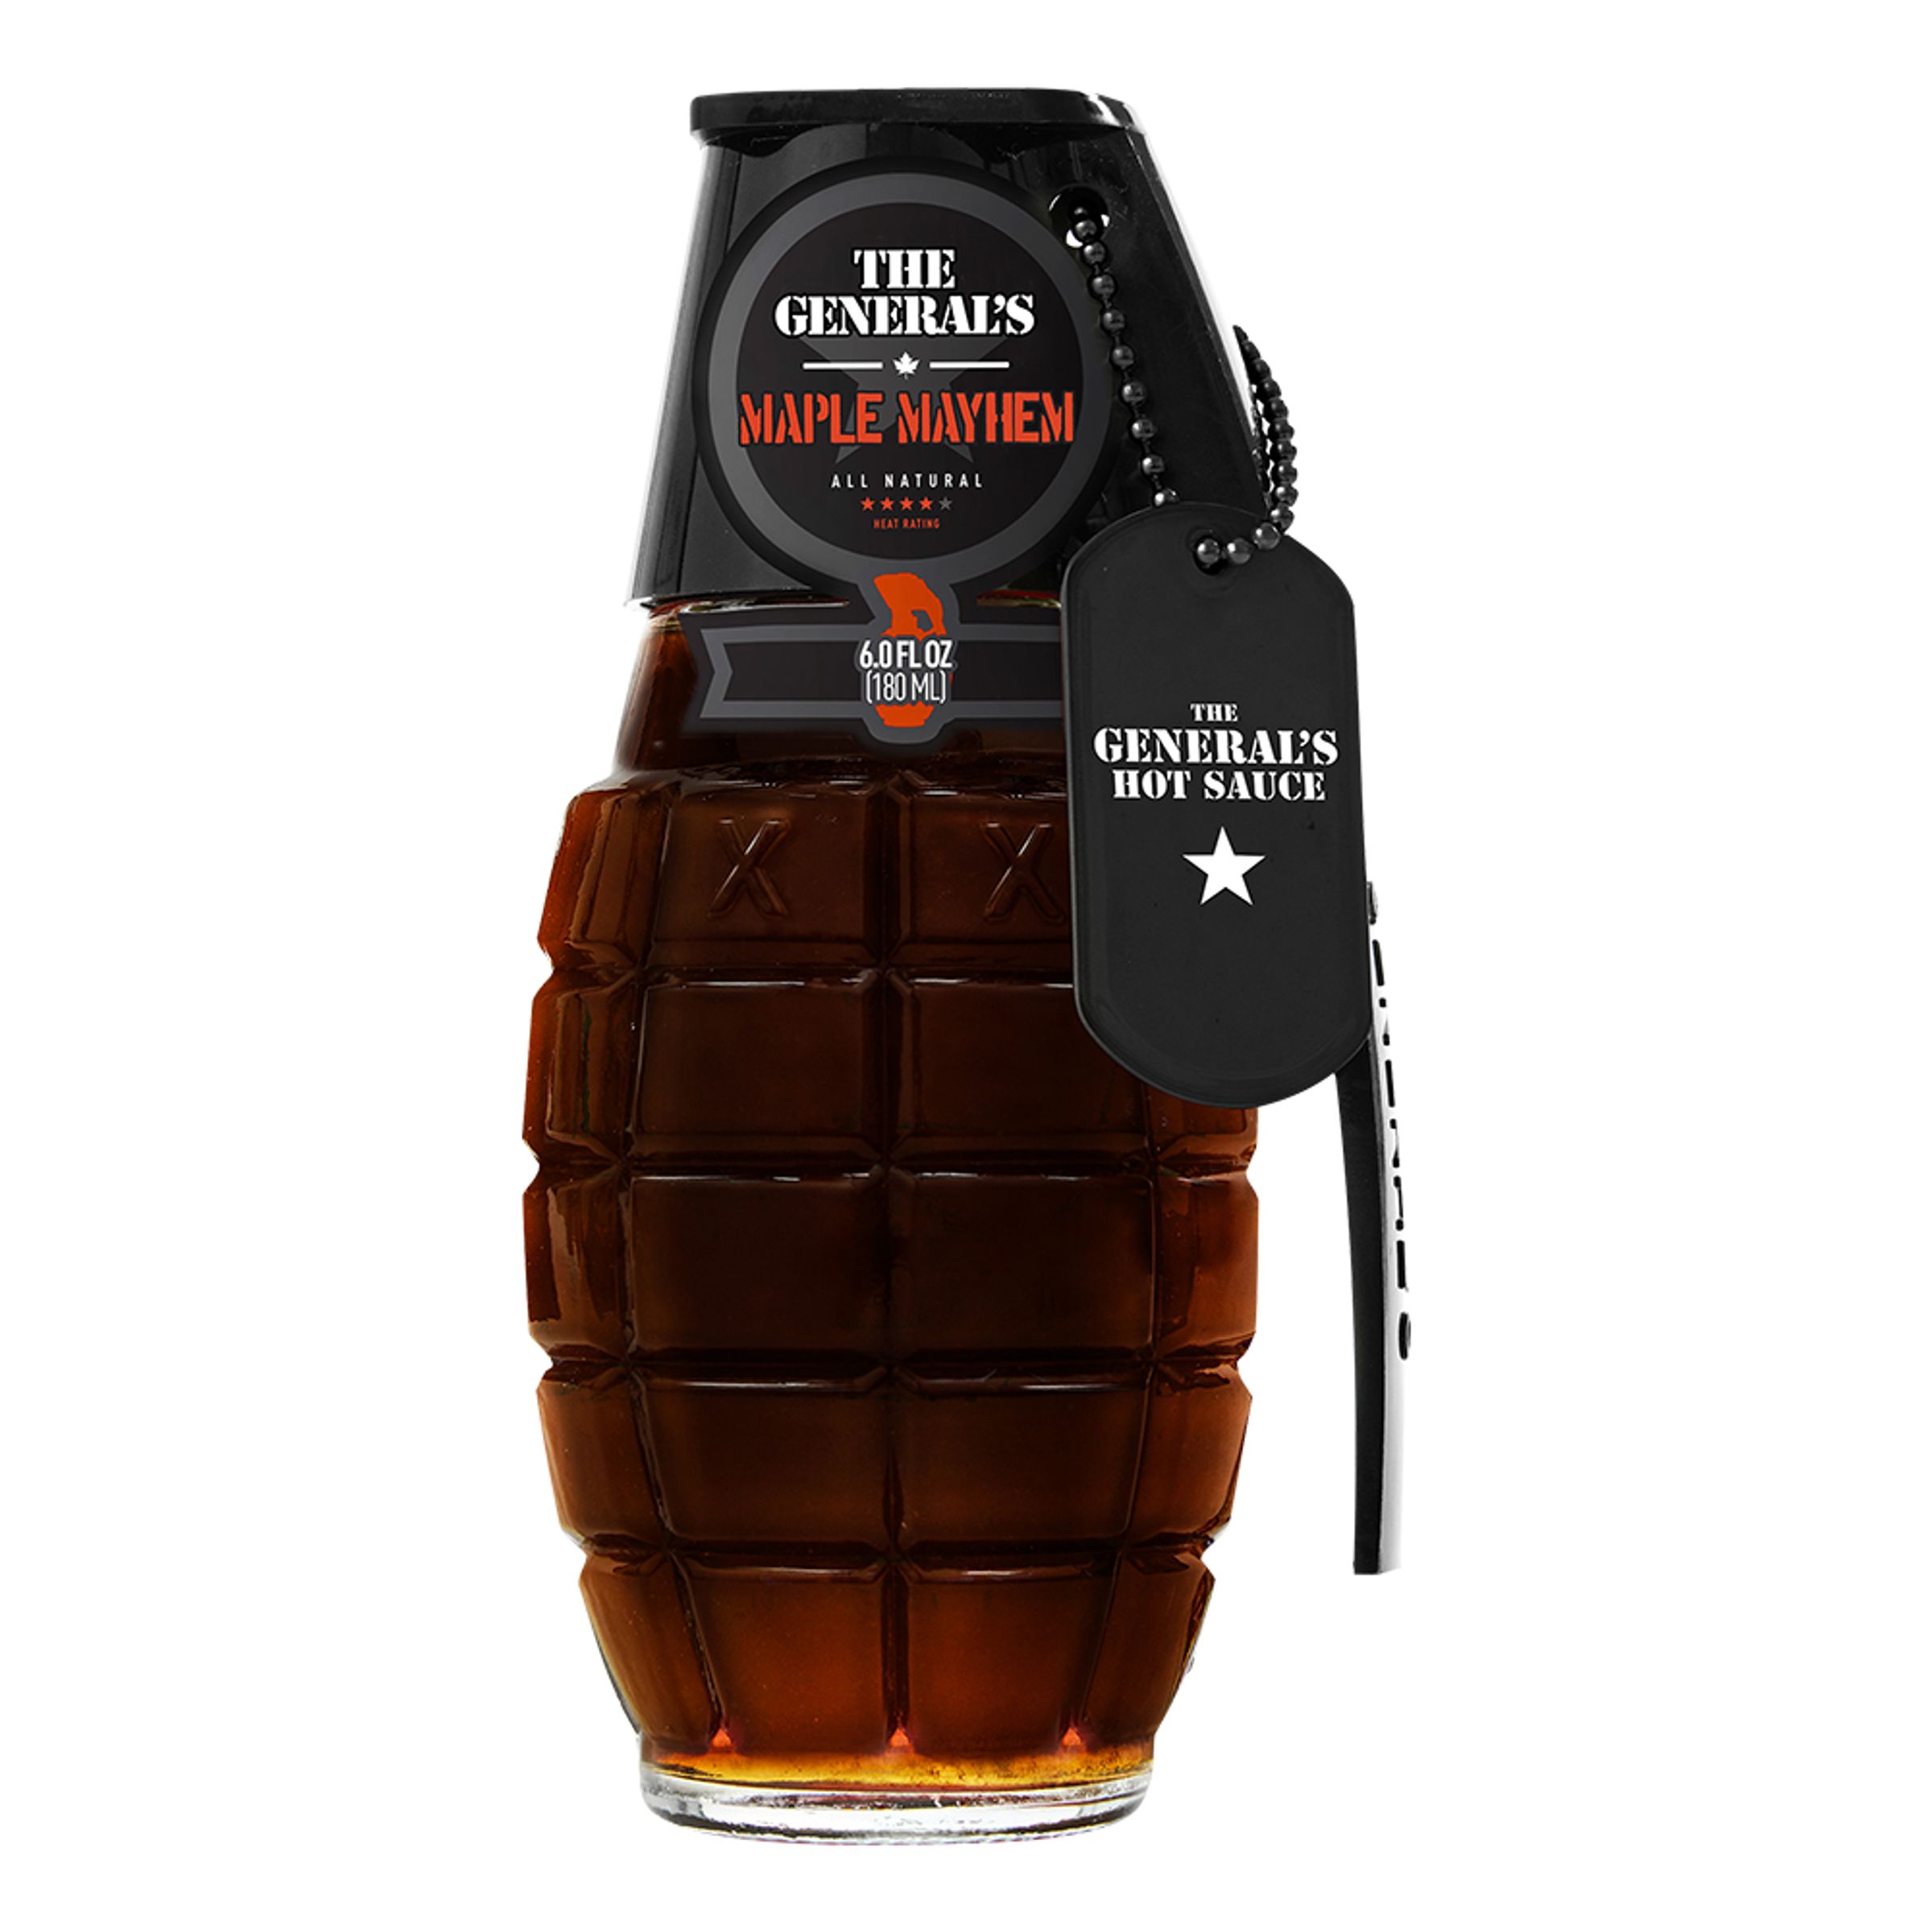 The General's Hot Sauce - Maple Mayhem